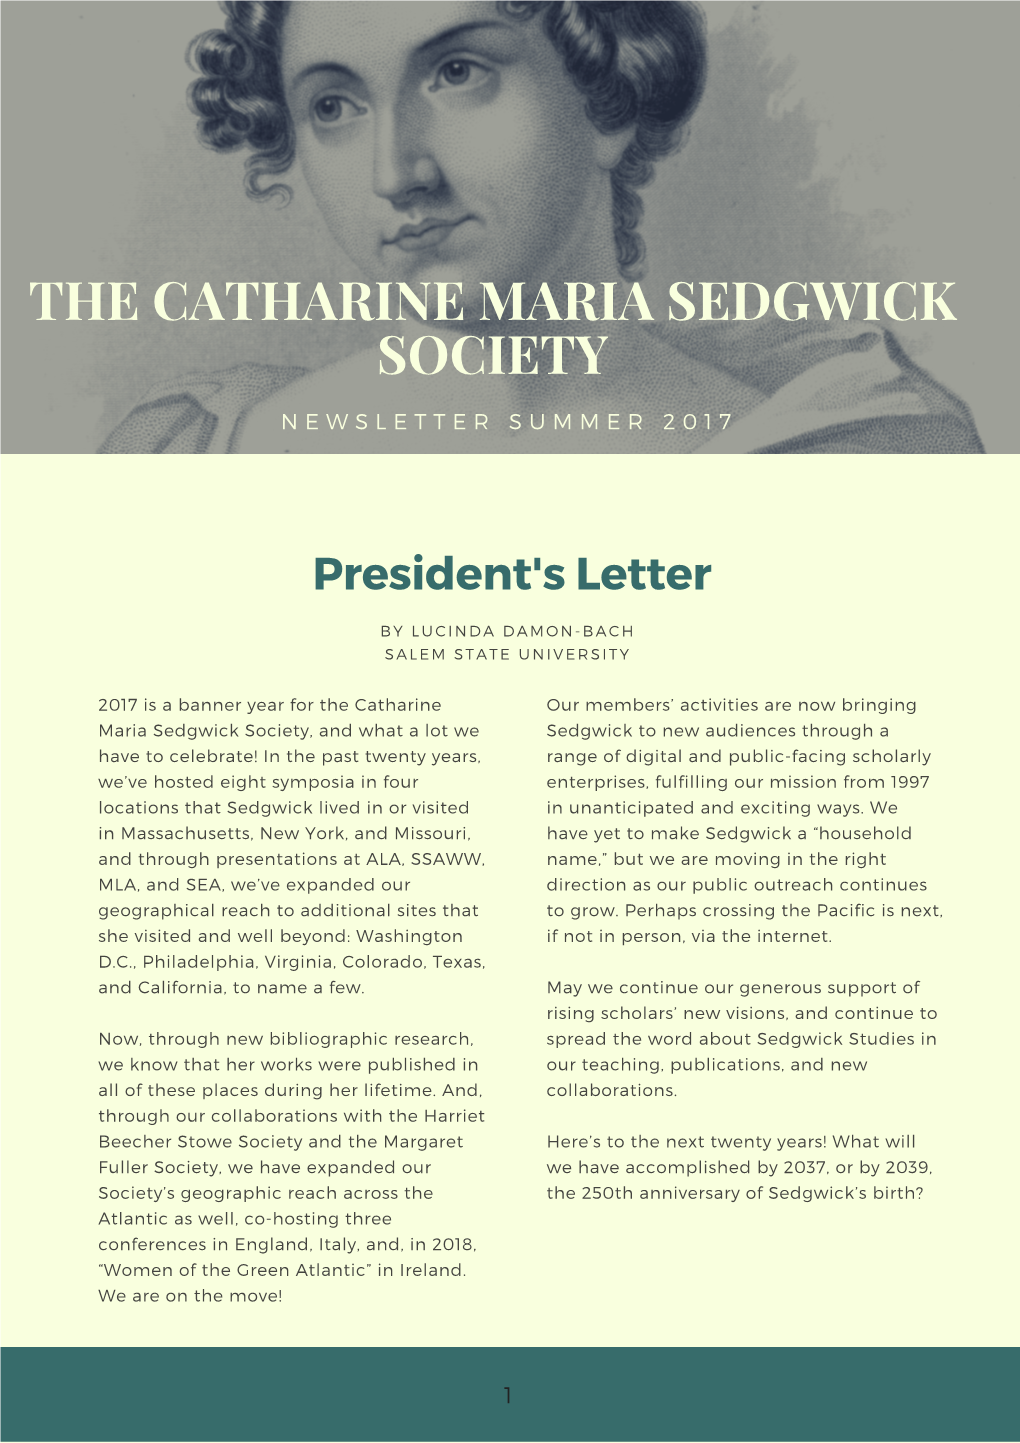 The Catharine Maria Sedgwick Society N E W S L E T T E R S U M M E R 2 0 1 7